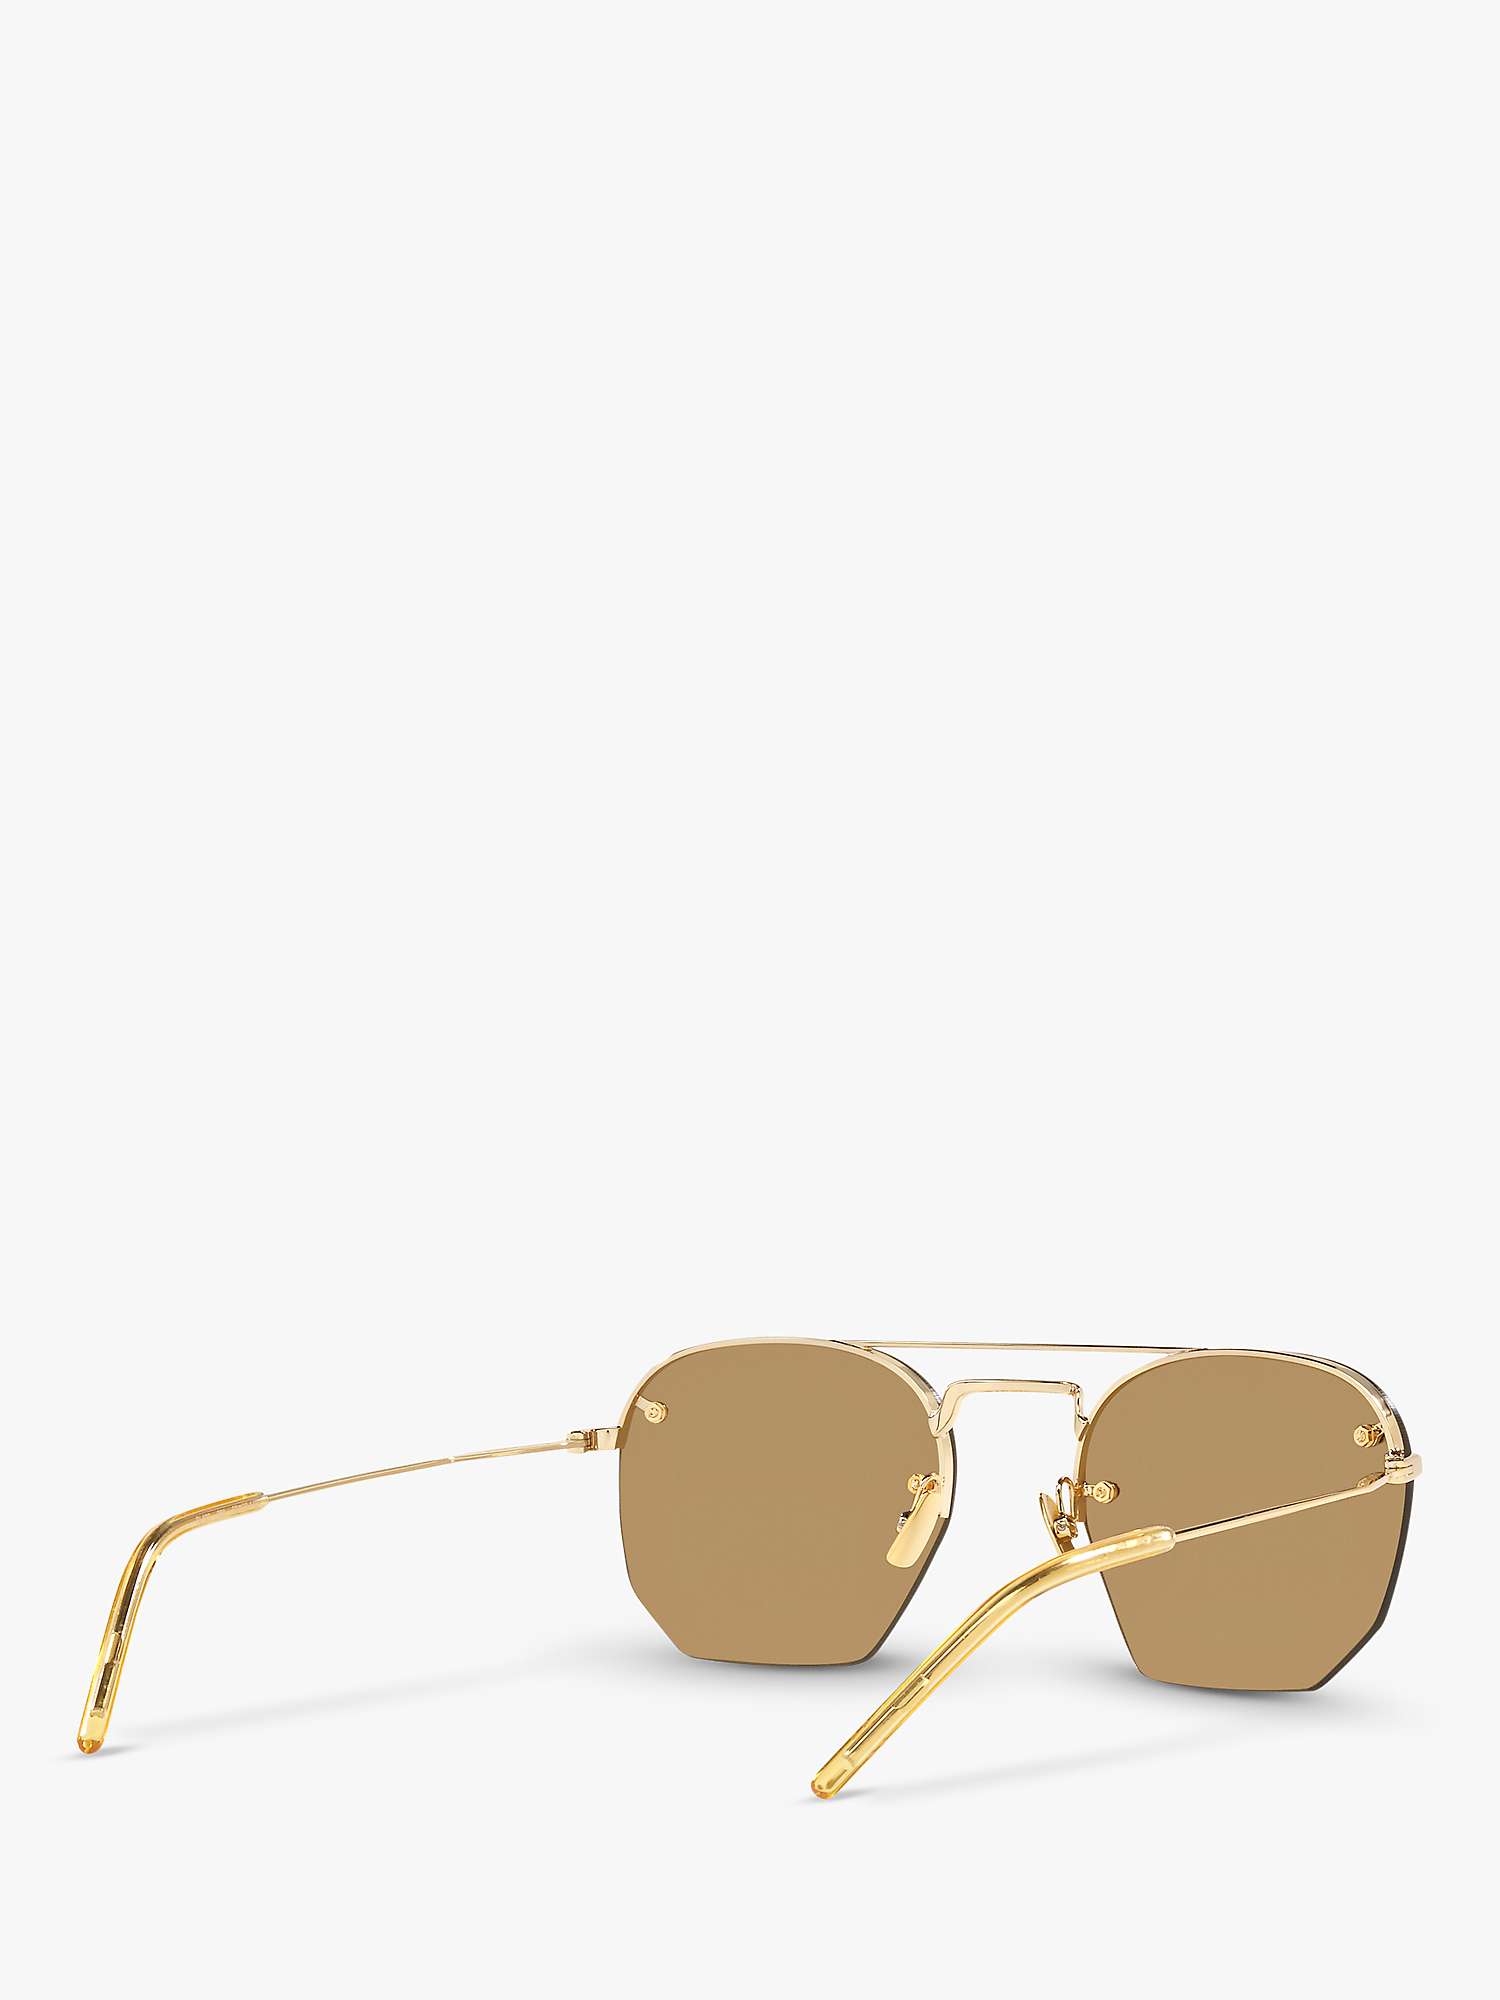 Buy Yves Saint Laurent SL 422 Men's Round Sunglasses Online at johnlewis.com